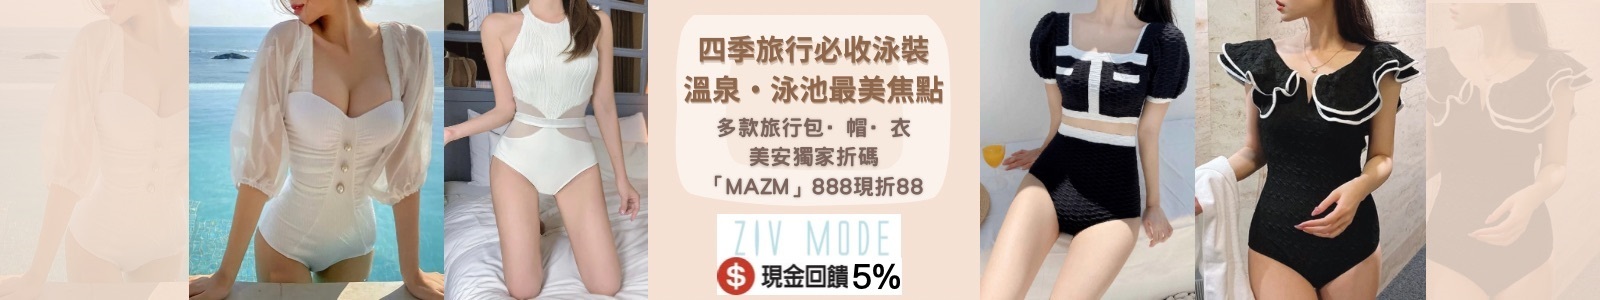 ZIV MODE，現金回饋 5%，熱銷泳裝．多款旅行包、帽、衣折扣，官網再領免運券，全店499免運。